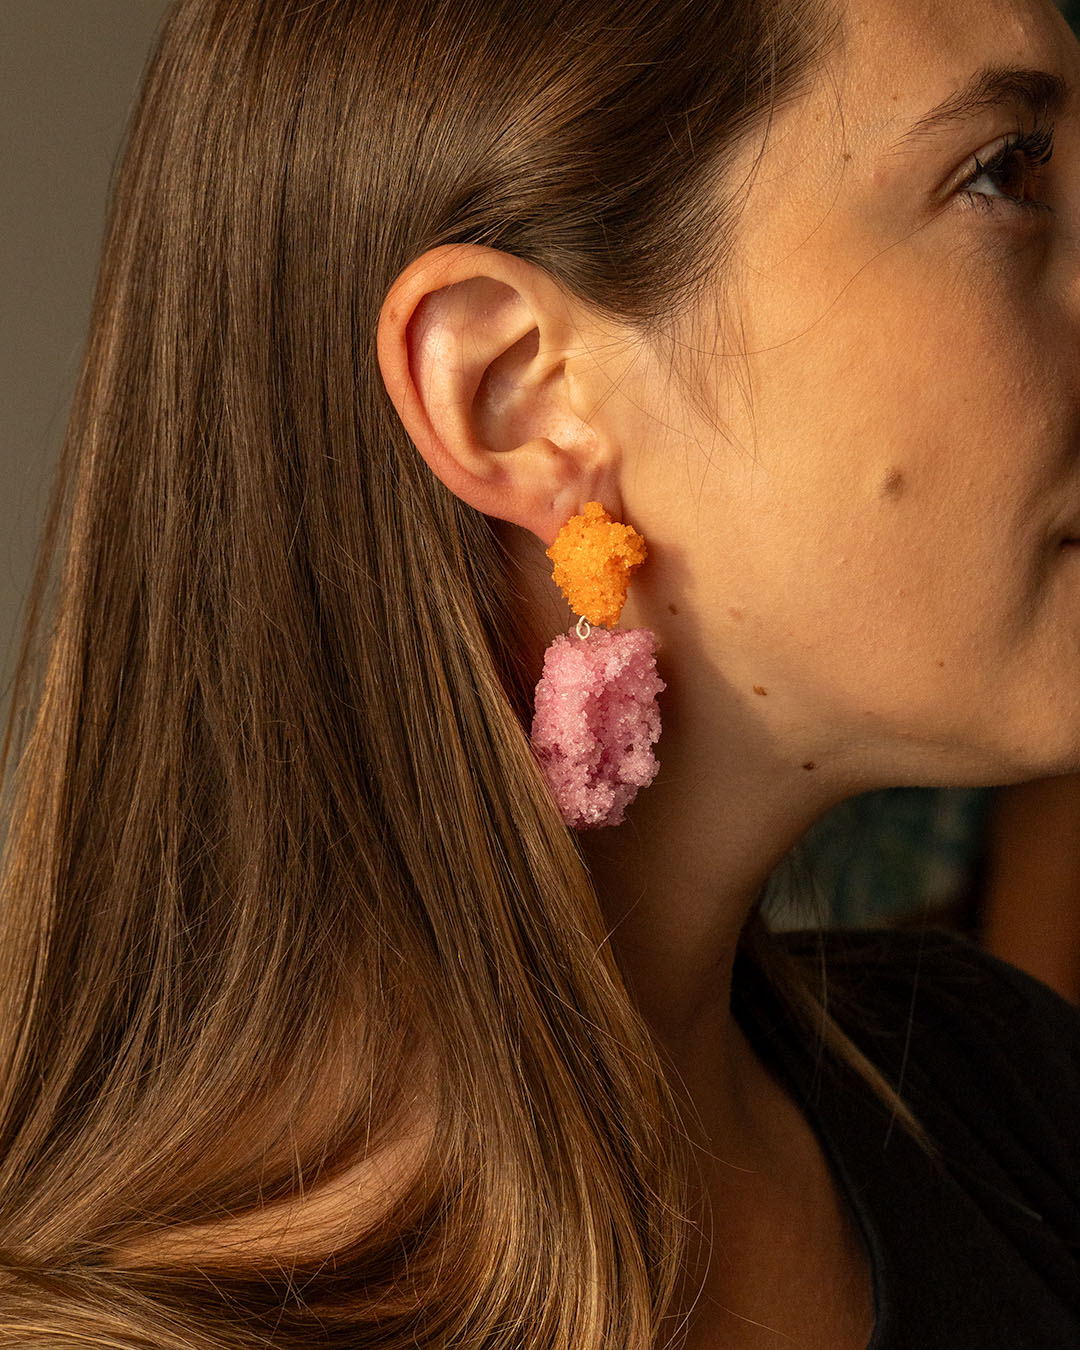 Double Sugar Earrings - Pink and orange - Carla Movia